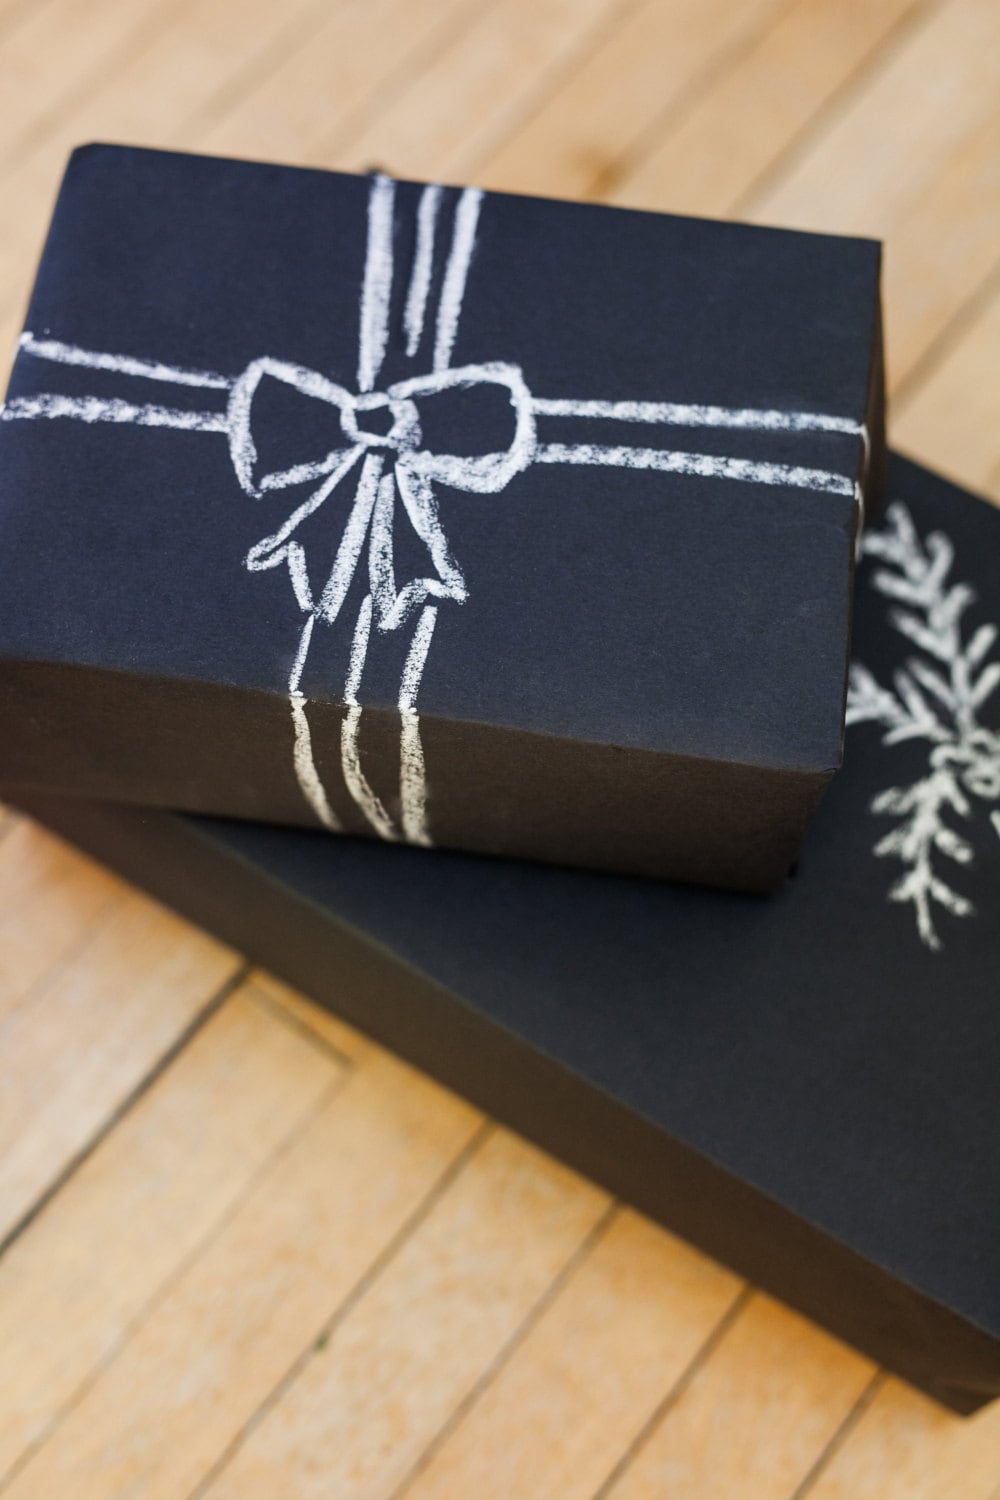 Matte Black Wrapping Paper Roll 30 Feet Chalkboard Gift Wrap 